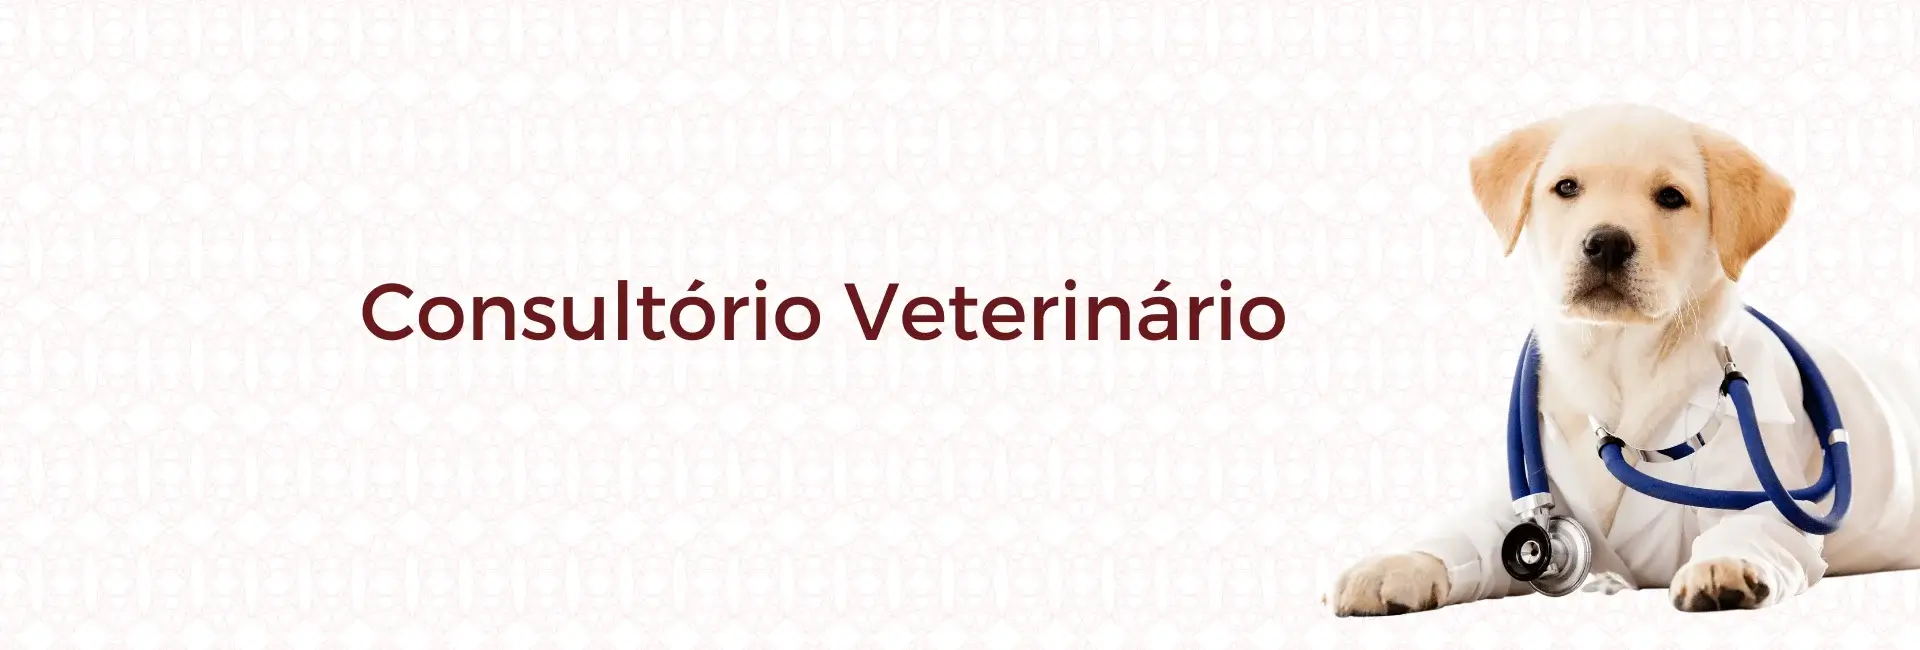 Namu-Royal-Pet-Store-Consultorio-Veterinario.webp